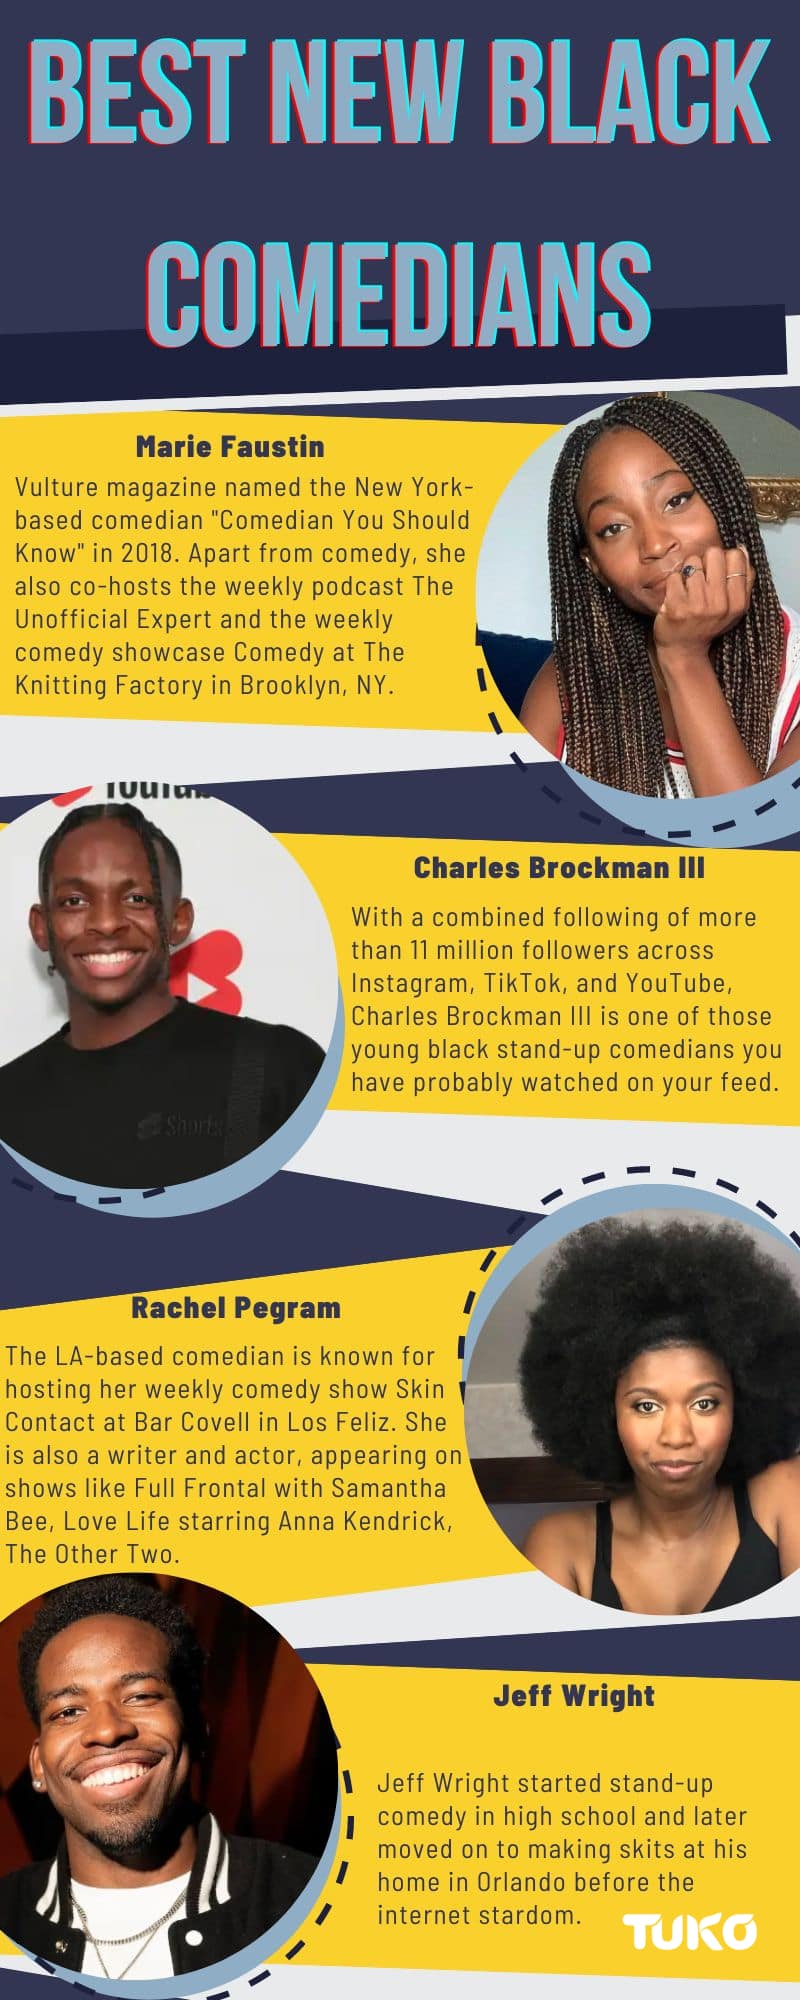 Best new black comedians